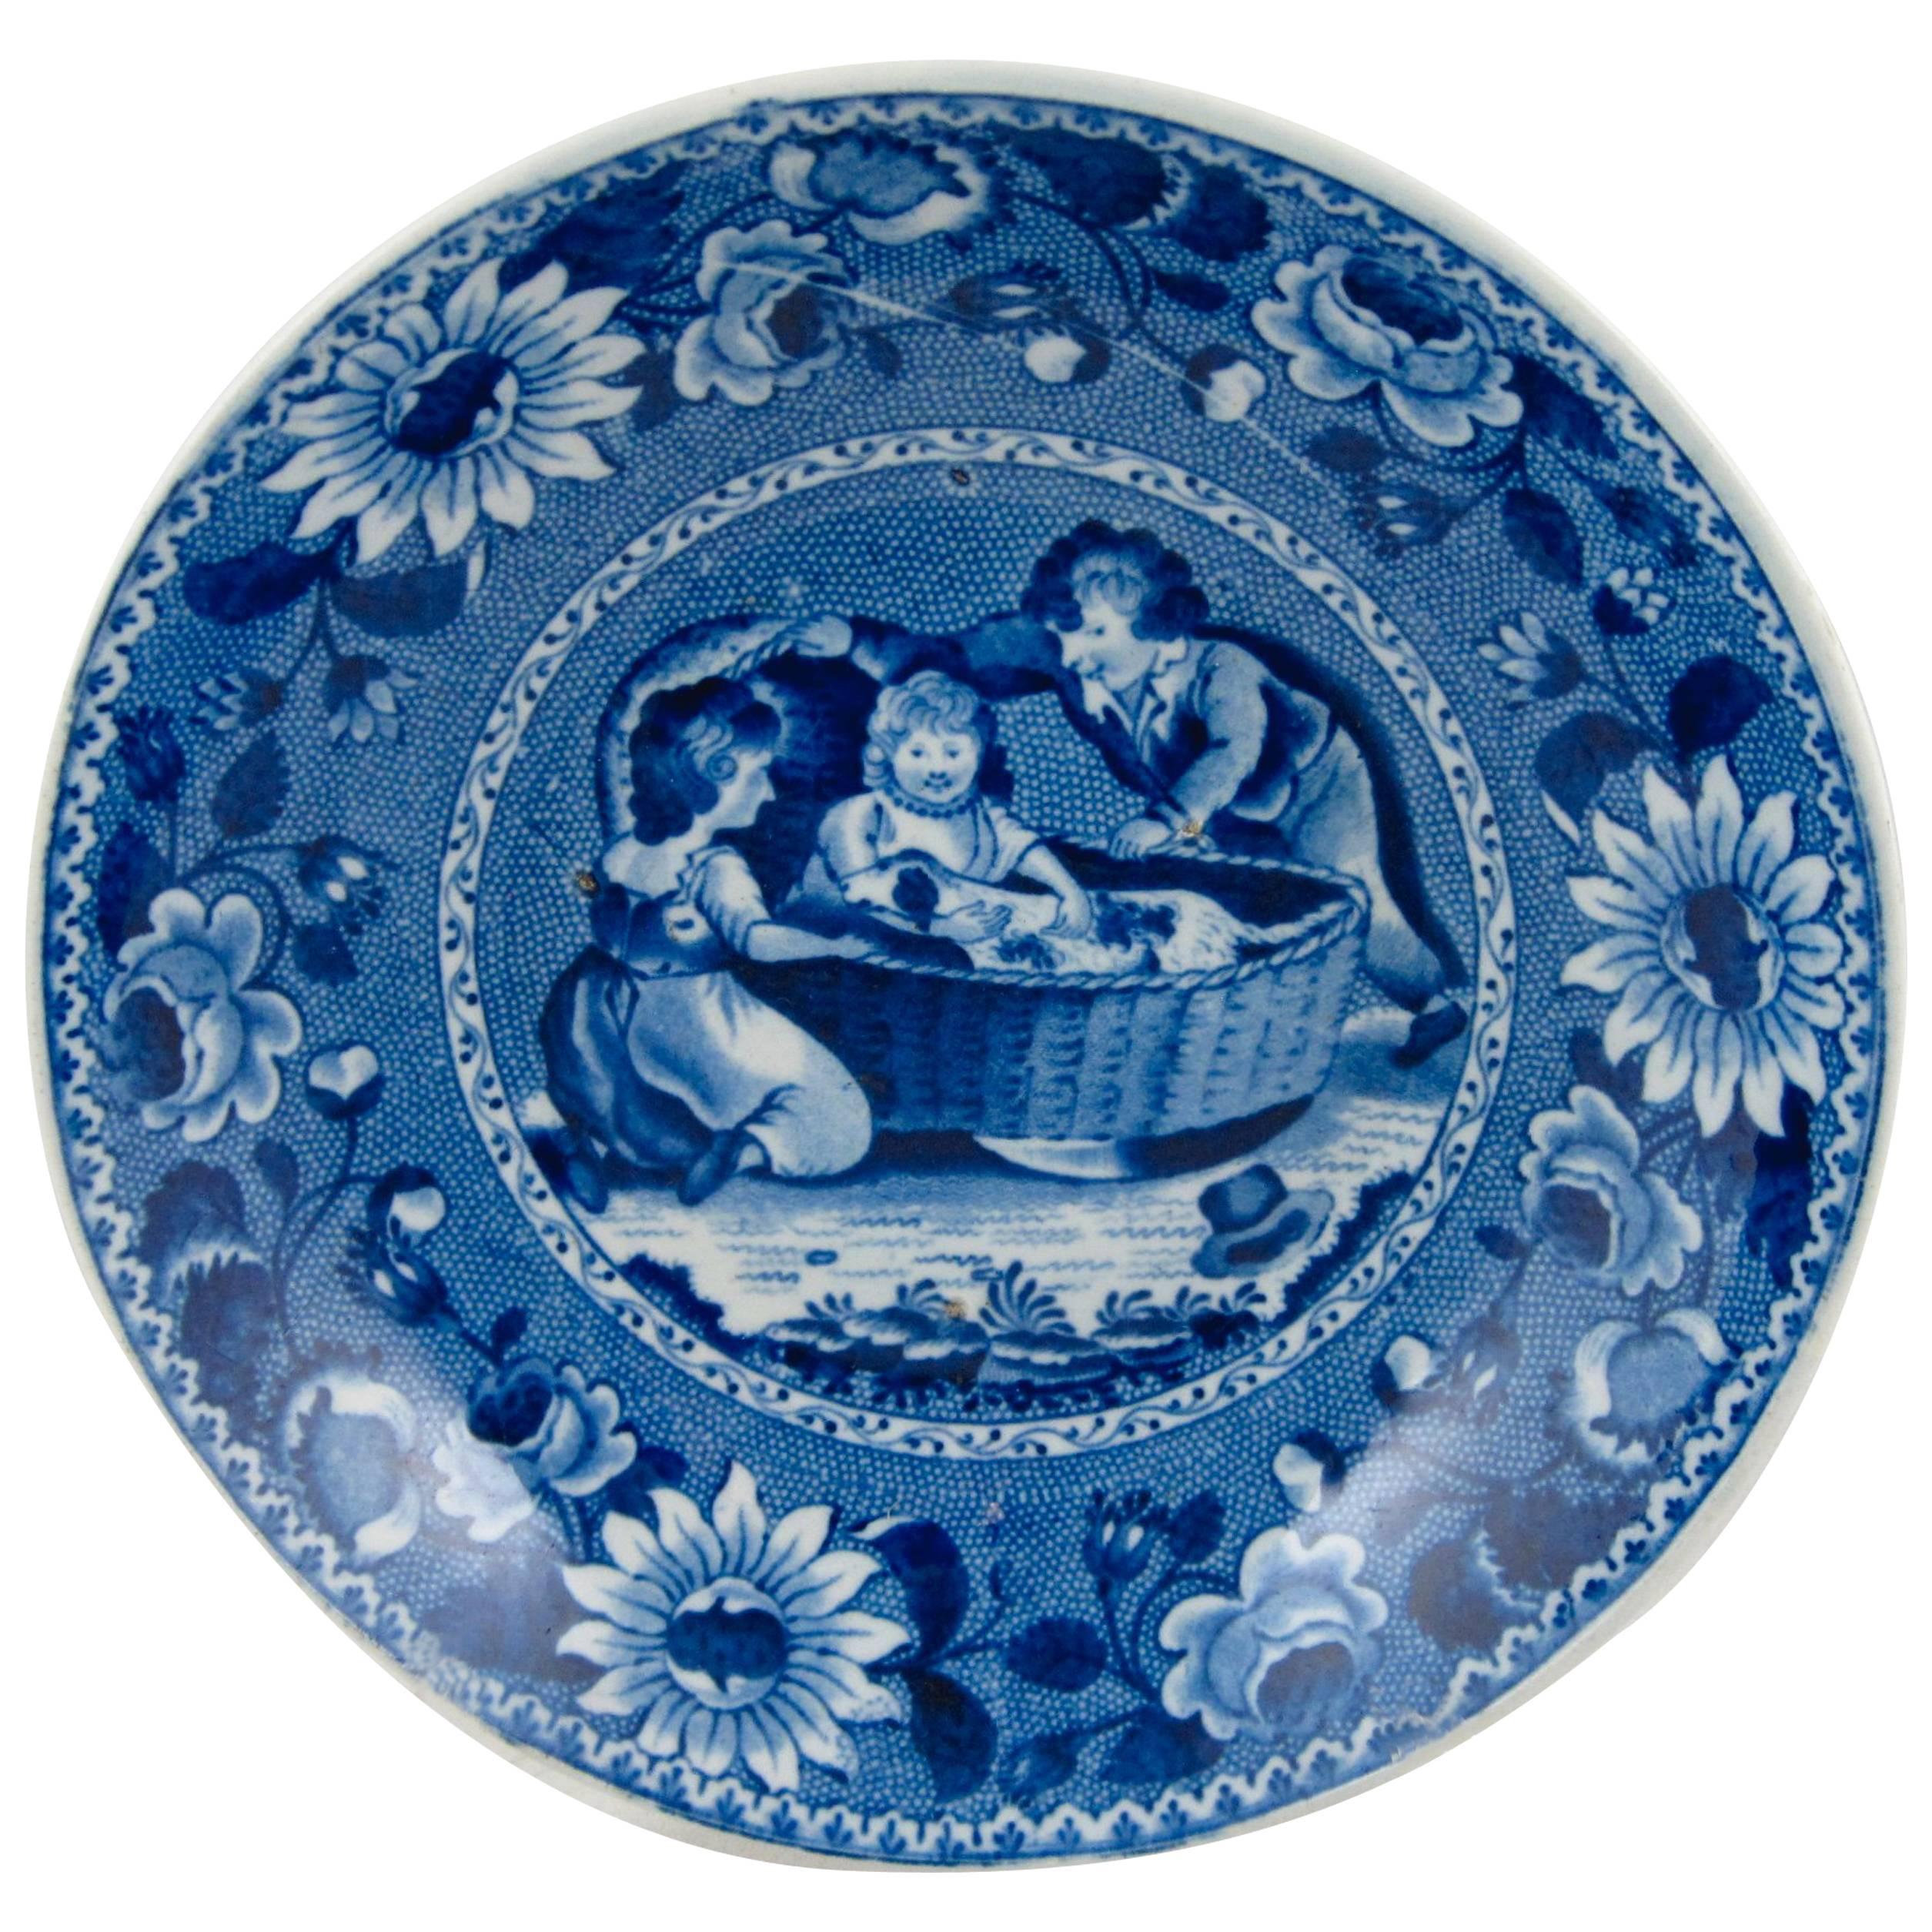 Antique Clews Tea Bowl Flow Blue Transferware Basket Pattern 1830's Staffordshire England